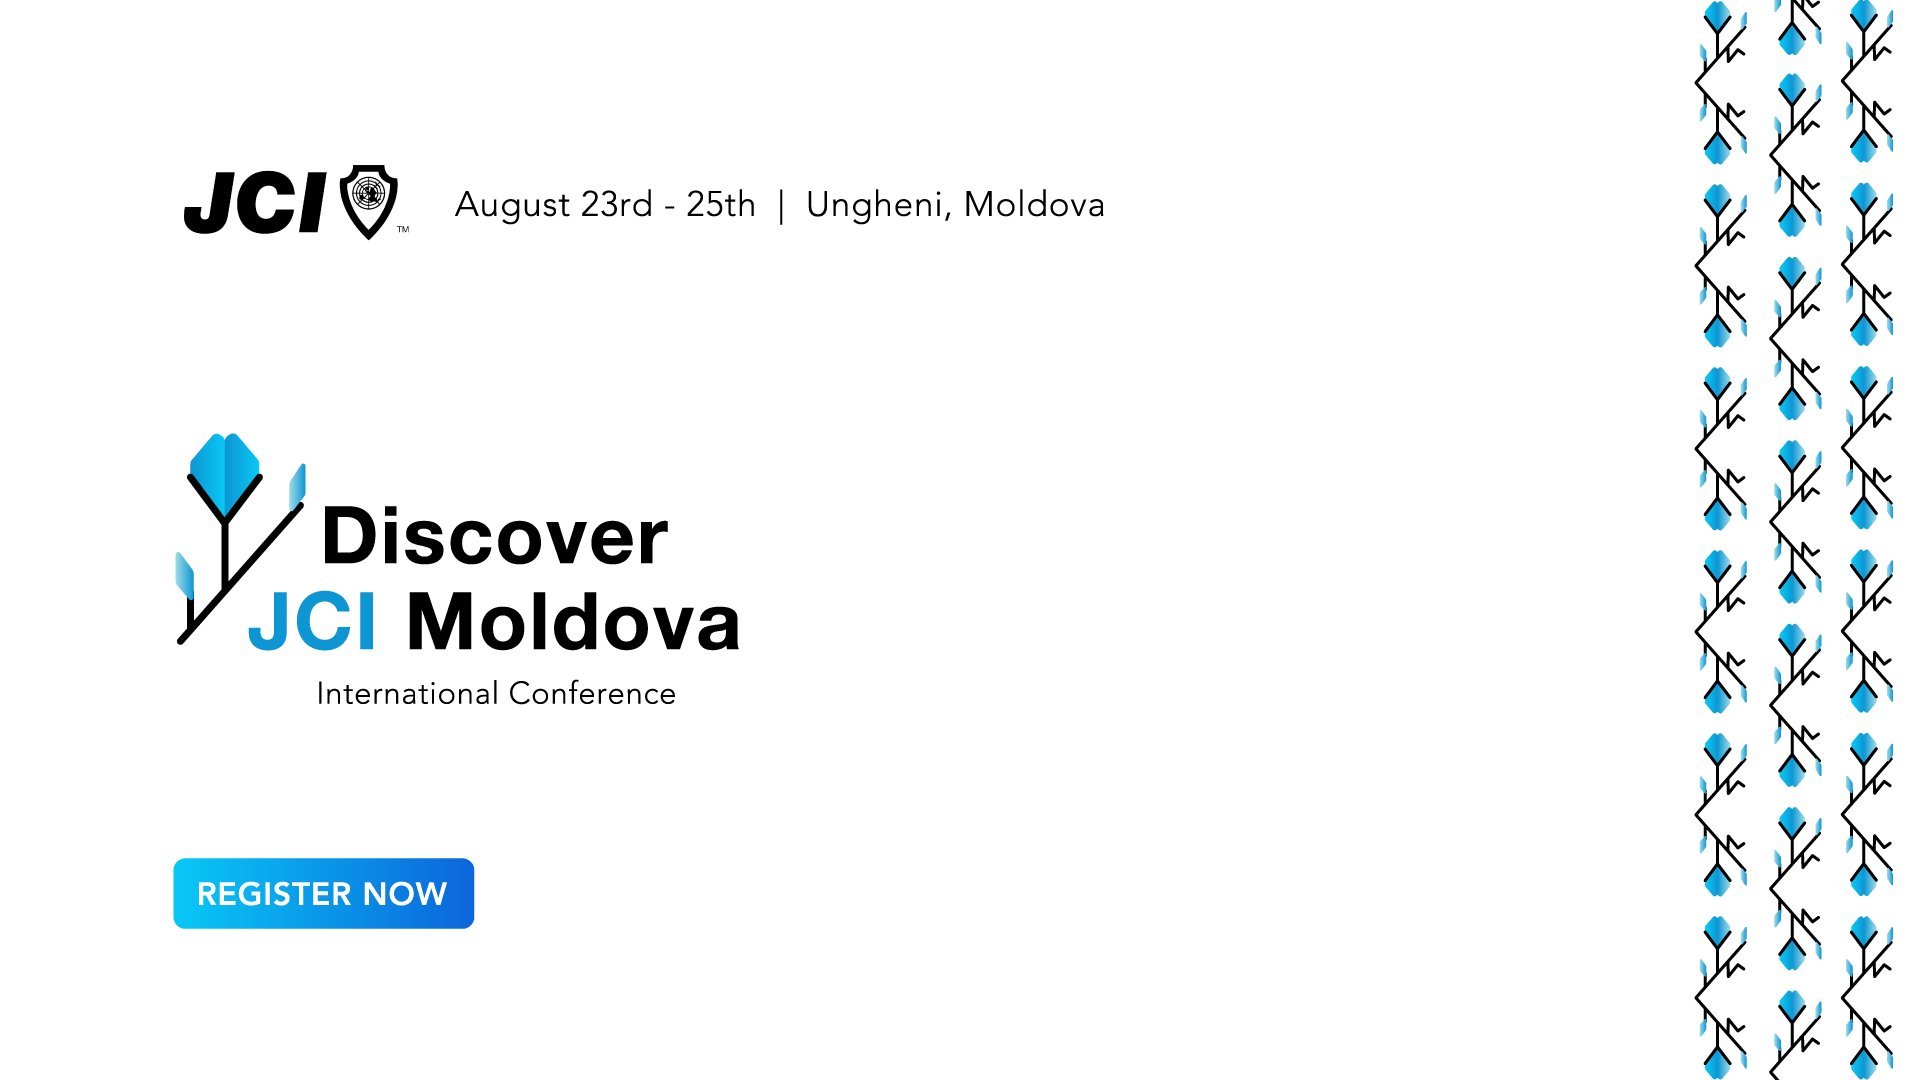 Discover JCI Moldova